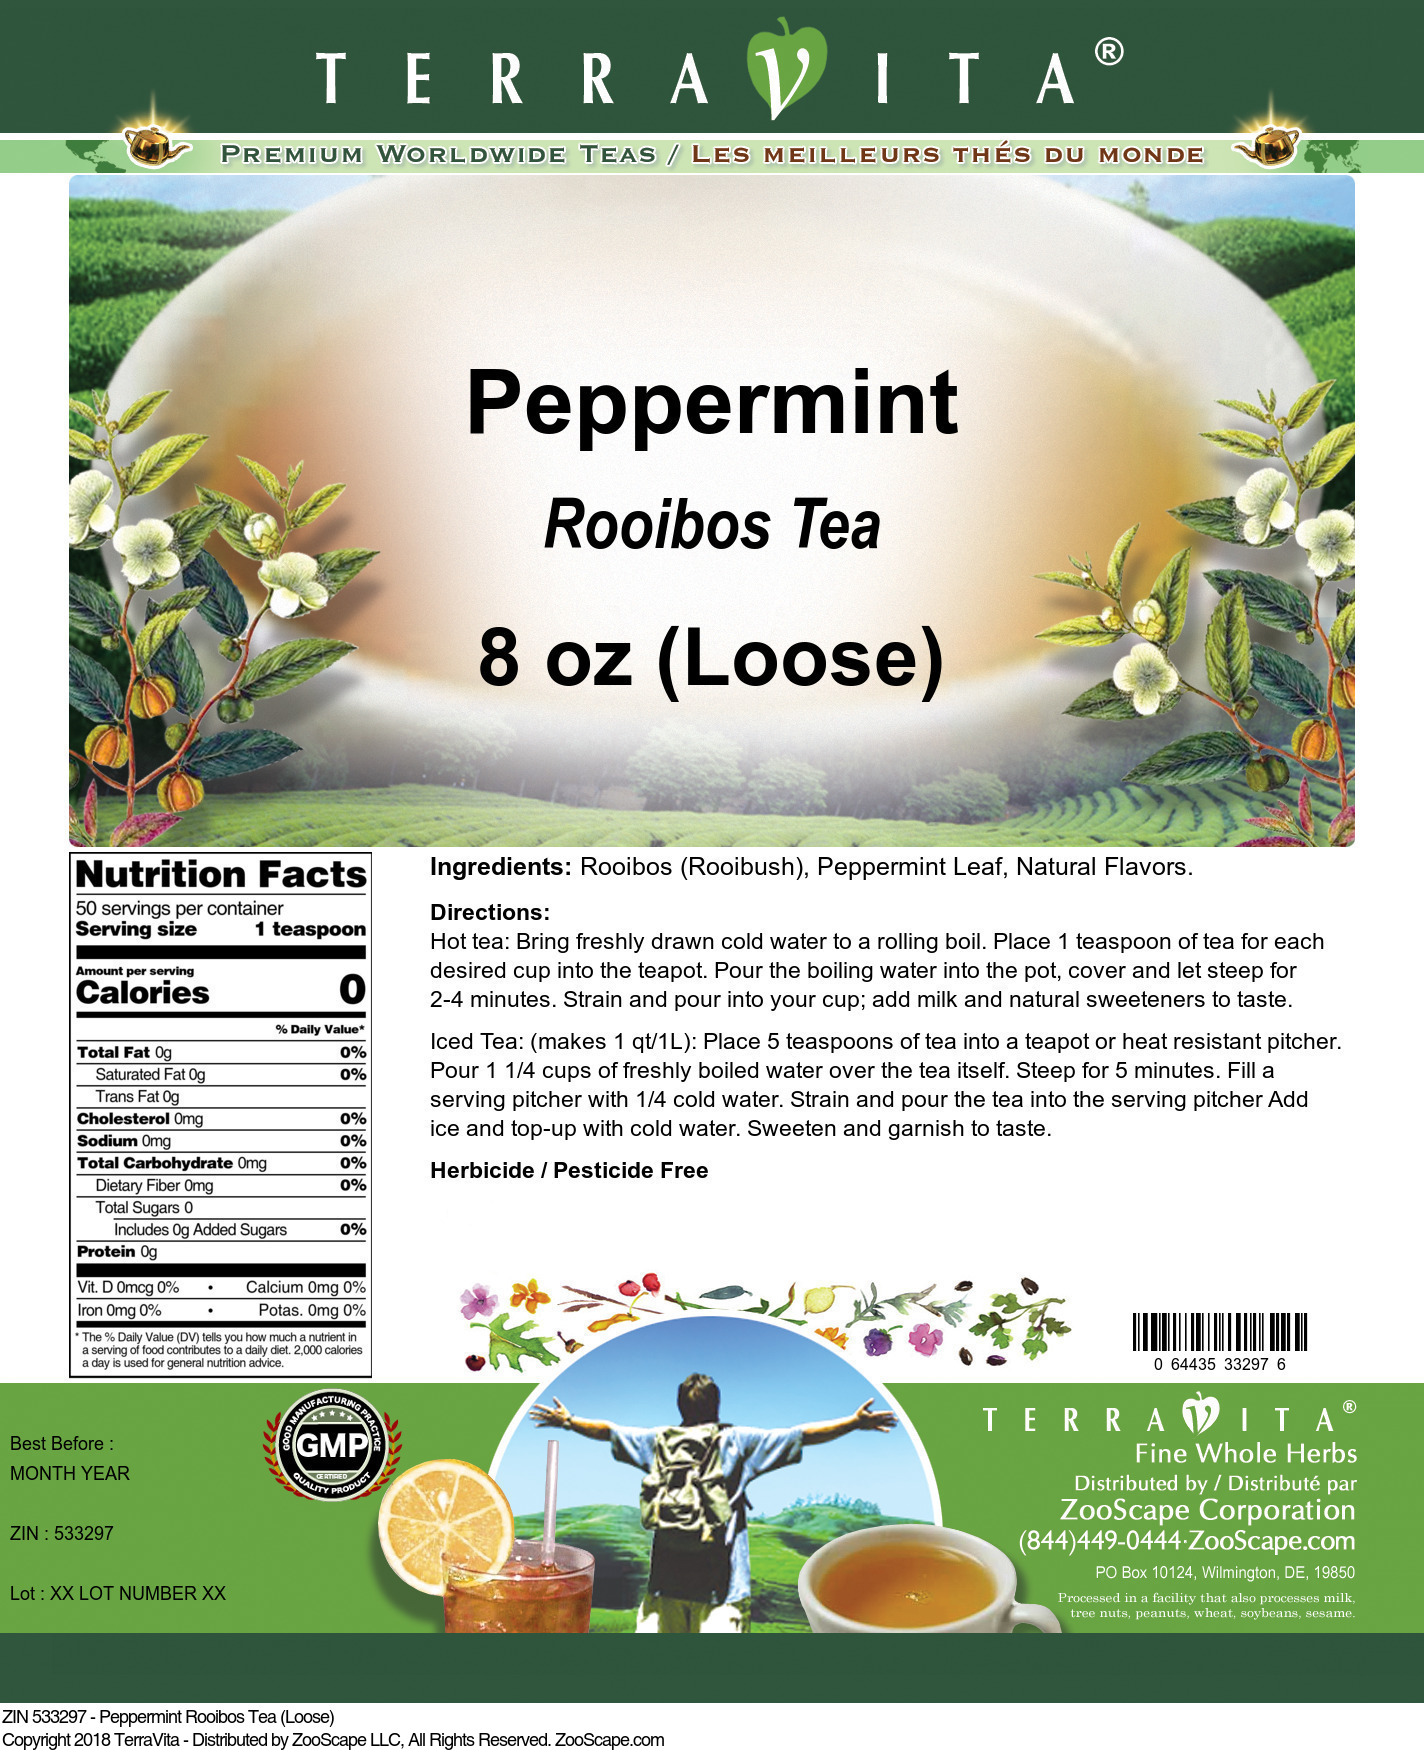 Peppermint Rooibos Tea (Loose) - Label